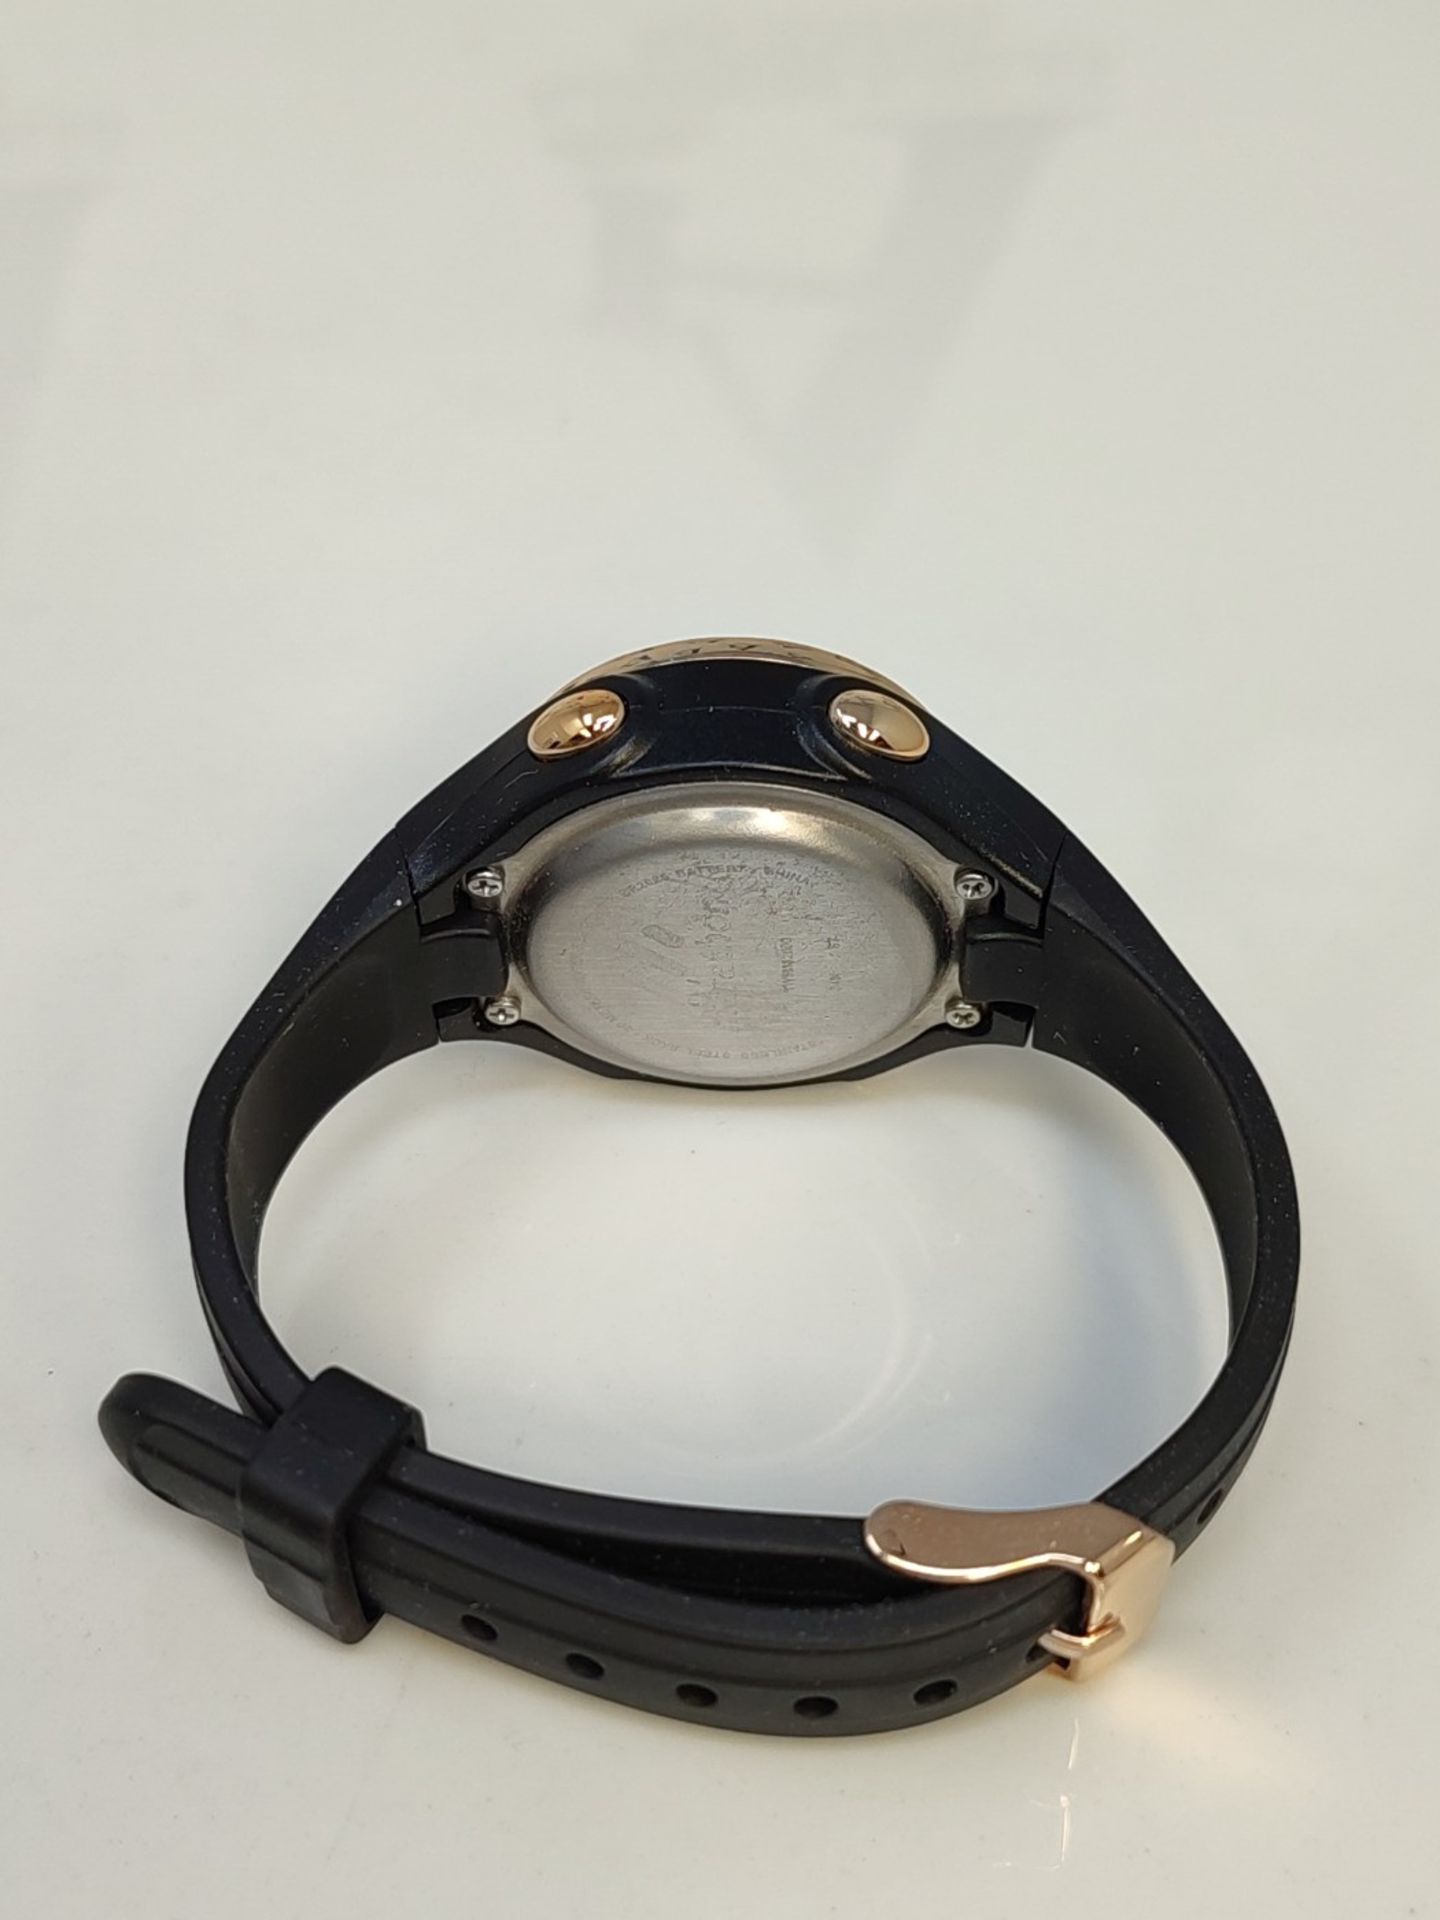 Timex Women's Digital Mechanical Watch with Resin Bracelet TW5M32800 - Image 3 of 6